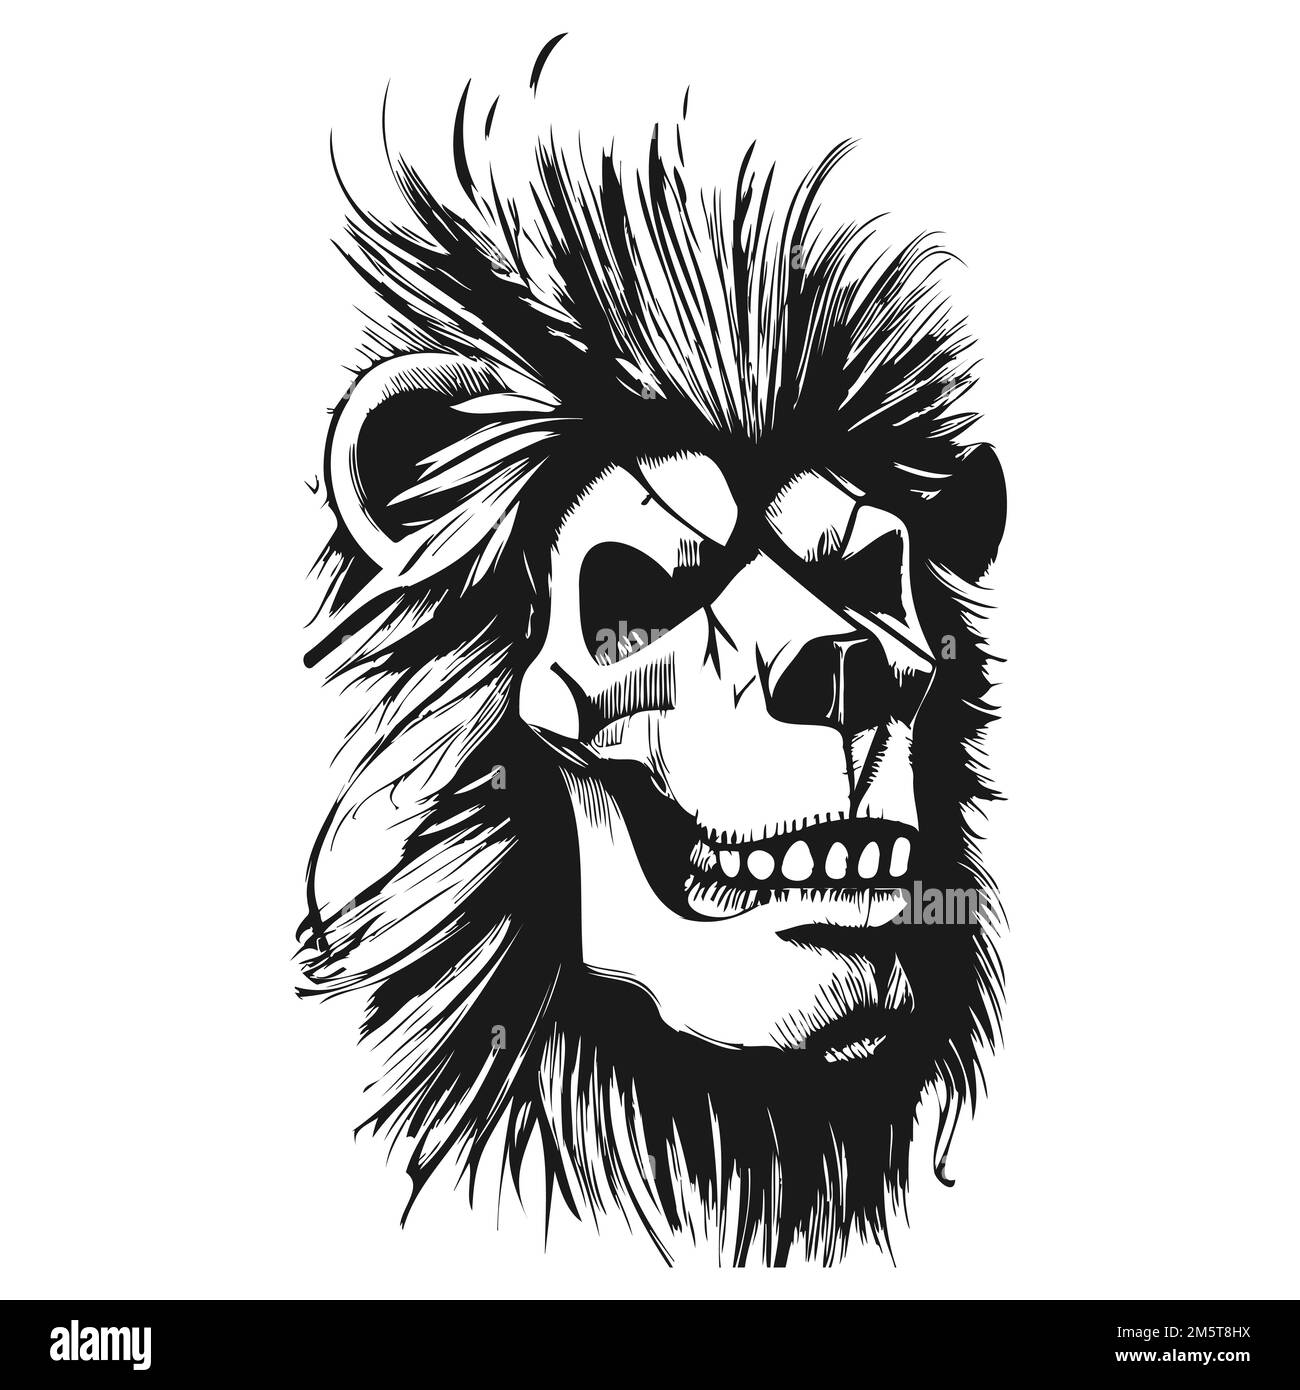 Lion Skull Tattoo Design Idea by thewildtattoo on DeviantArt